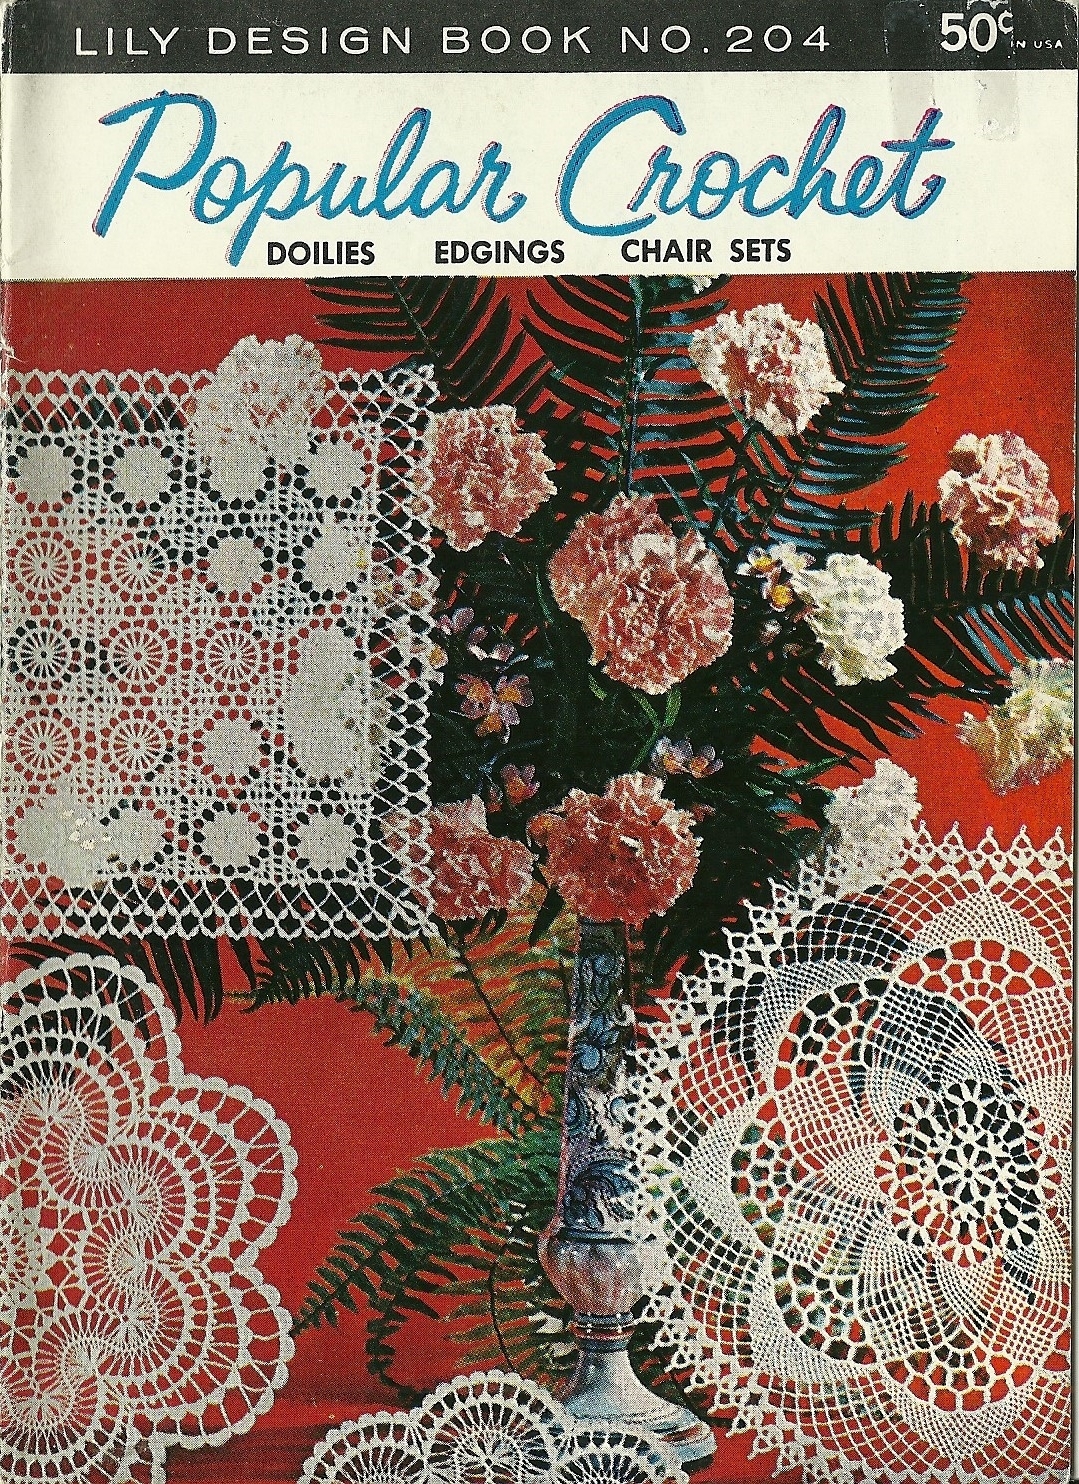 Popular Crochet Lily Design Book No. 204 1977 - $6.99